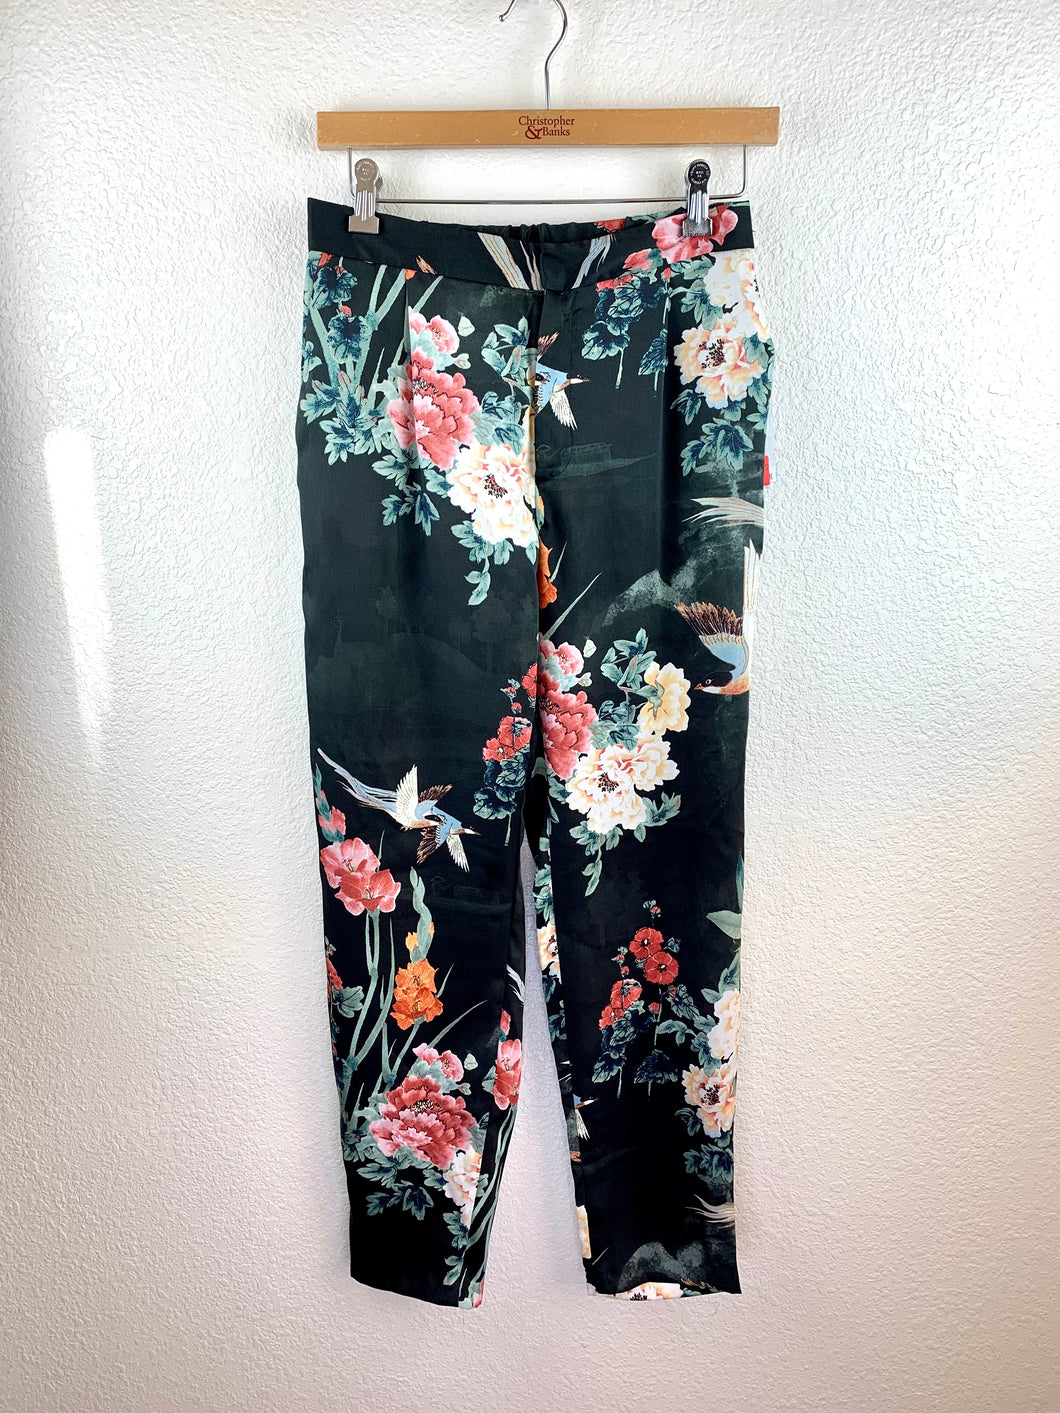 Zara Floral Printed Pant size S